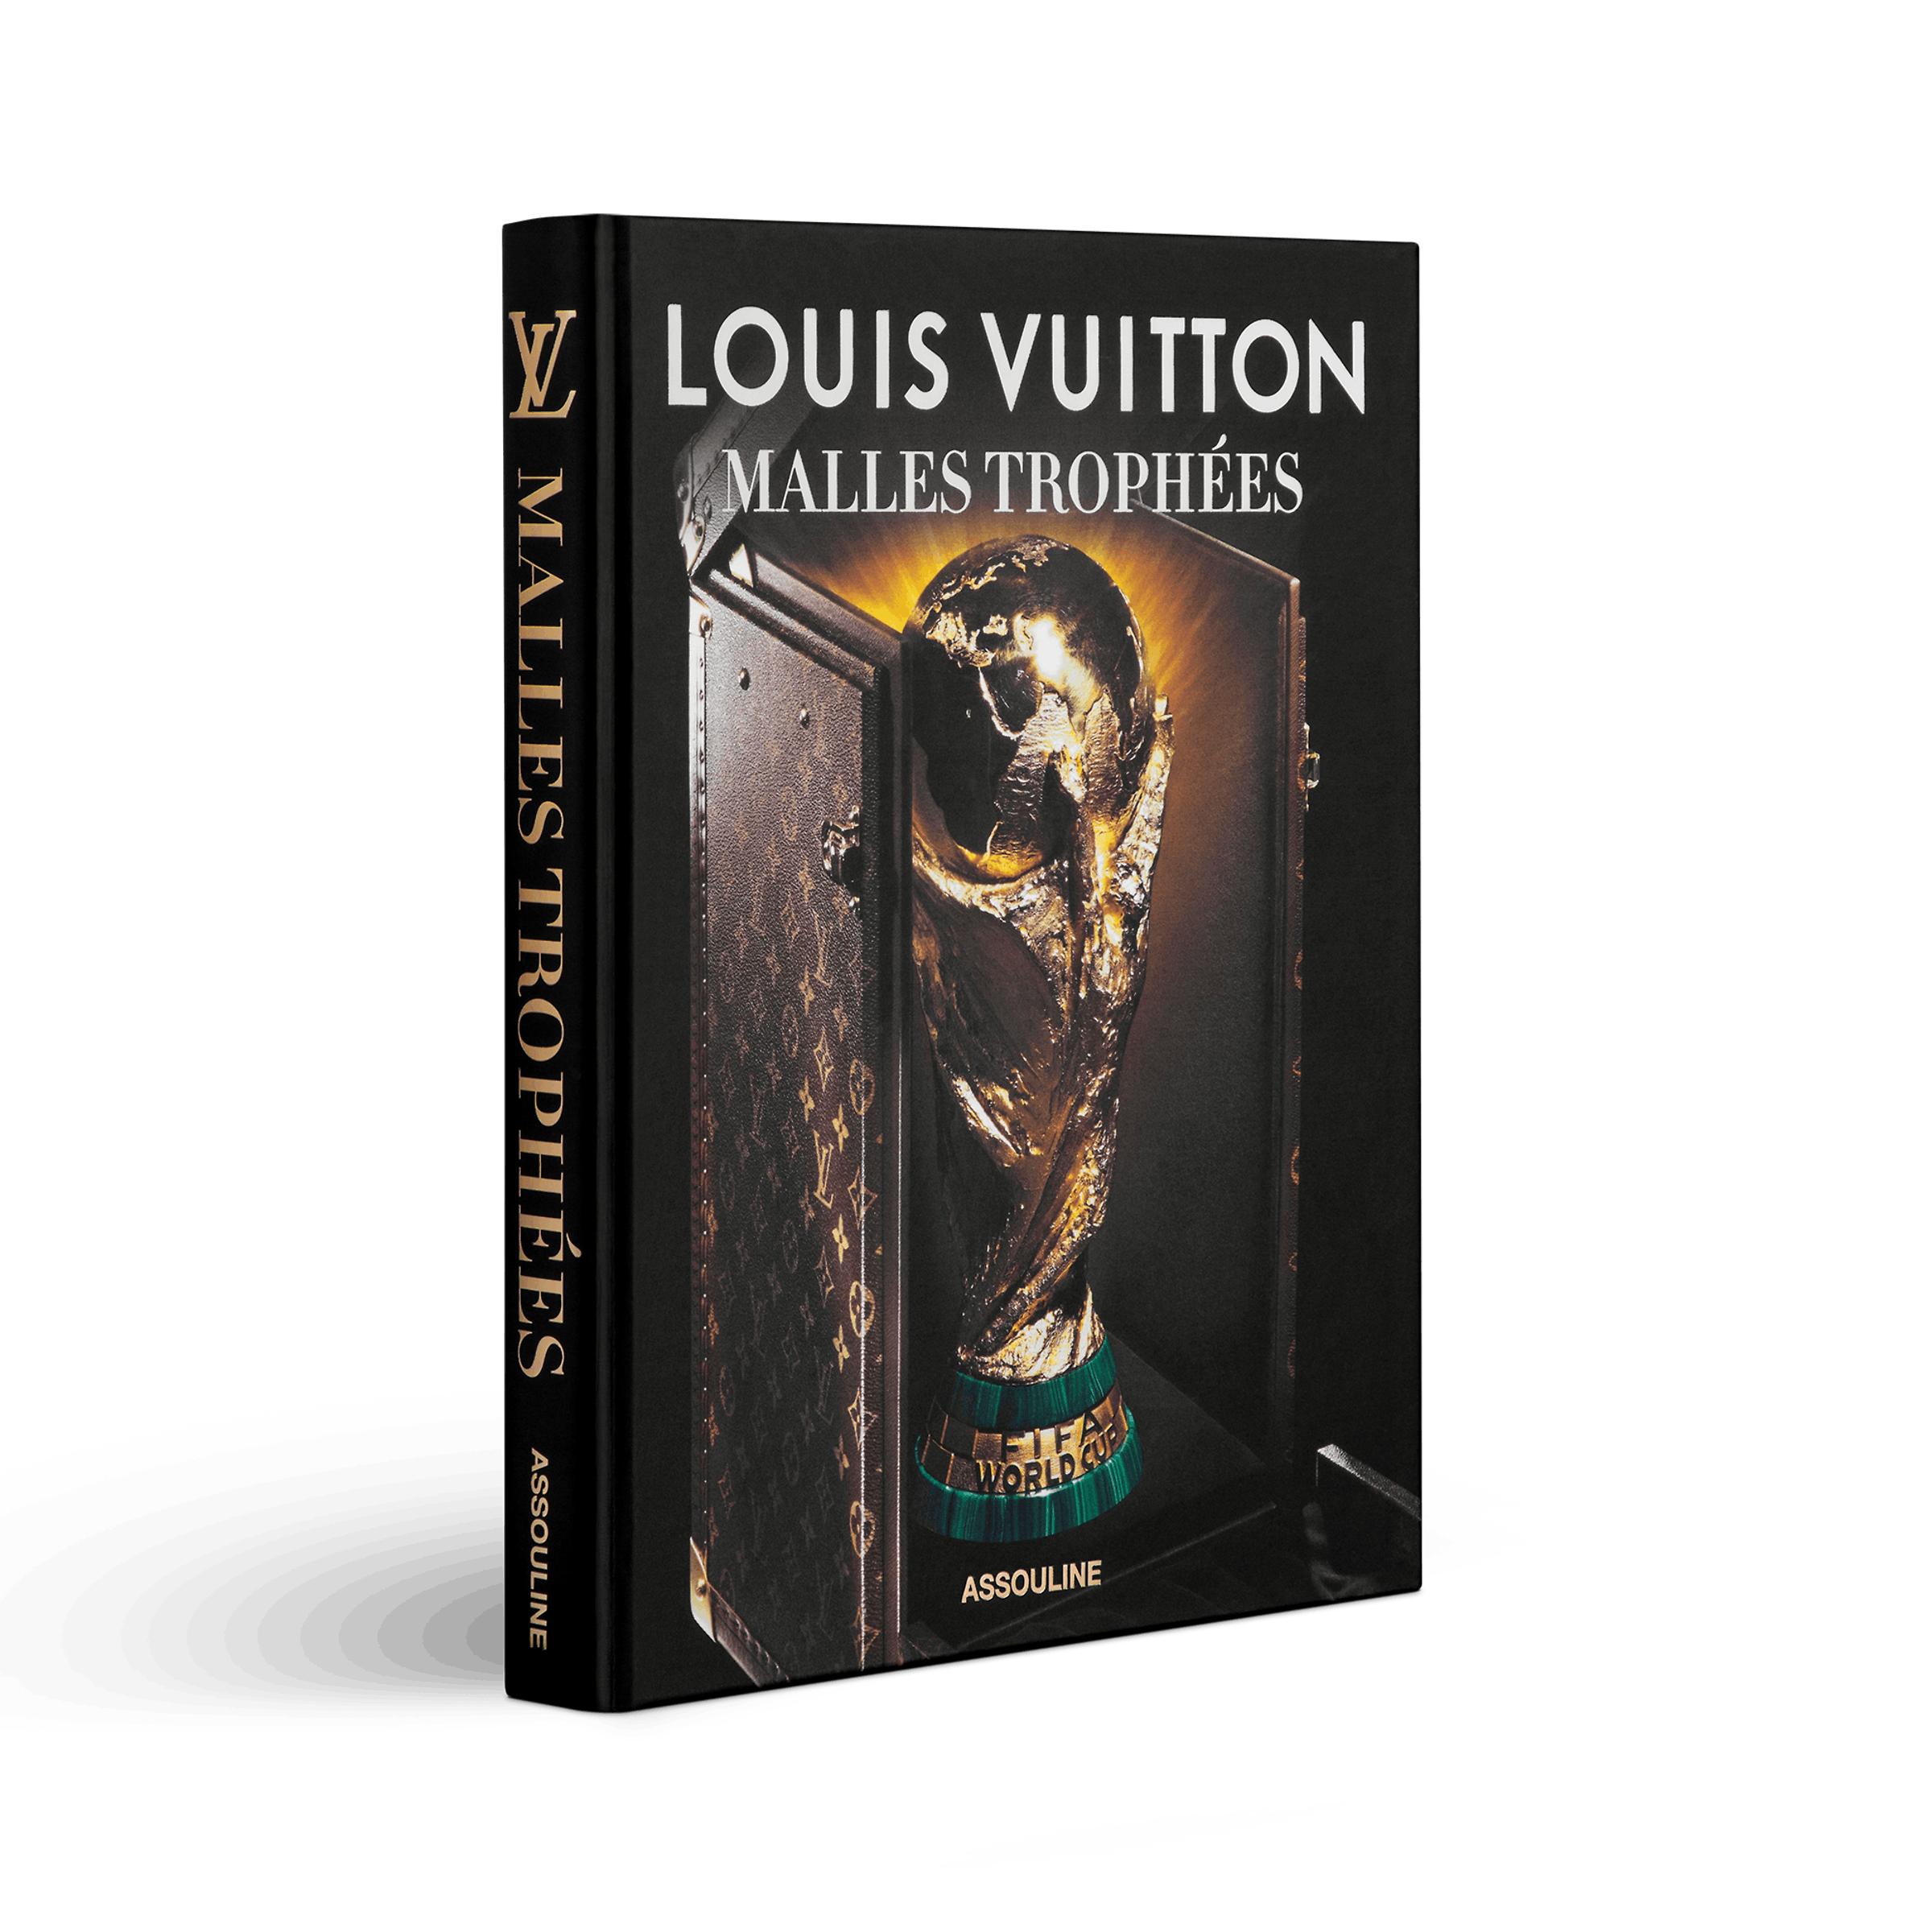 Assouline Louis Vuitton Trophy Trunks Book - Black